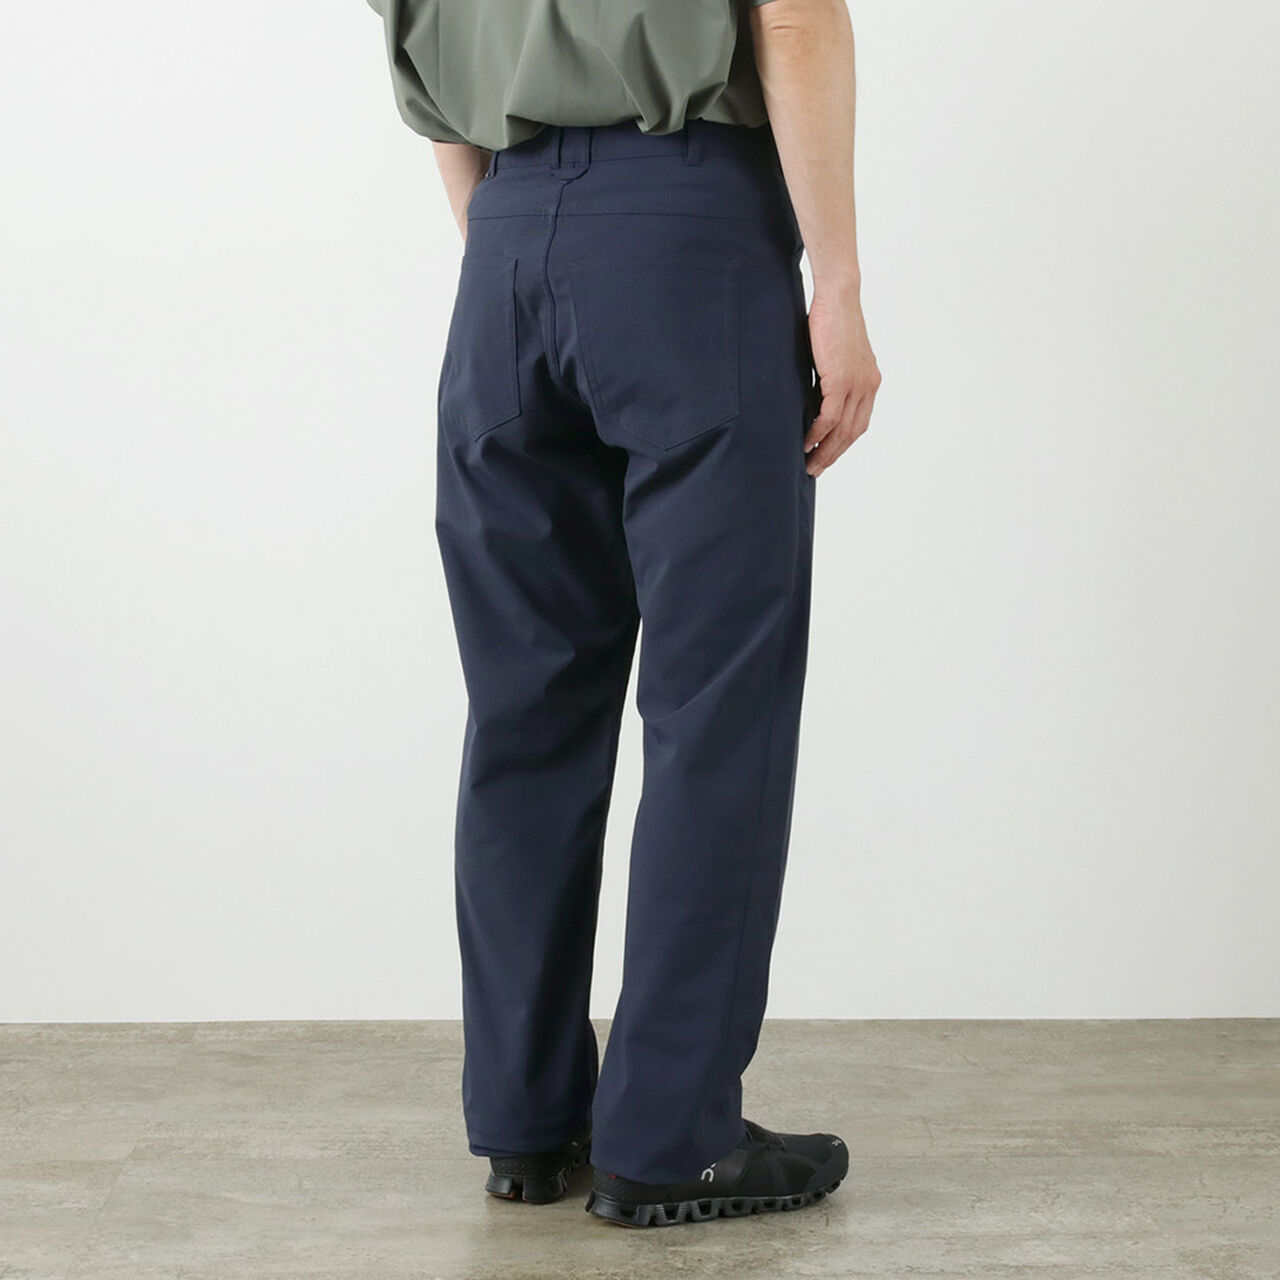 Men's Comfort Stretch Dock Pants, Standard Fit, Straight Leg at